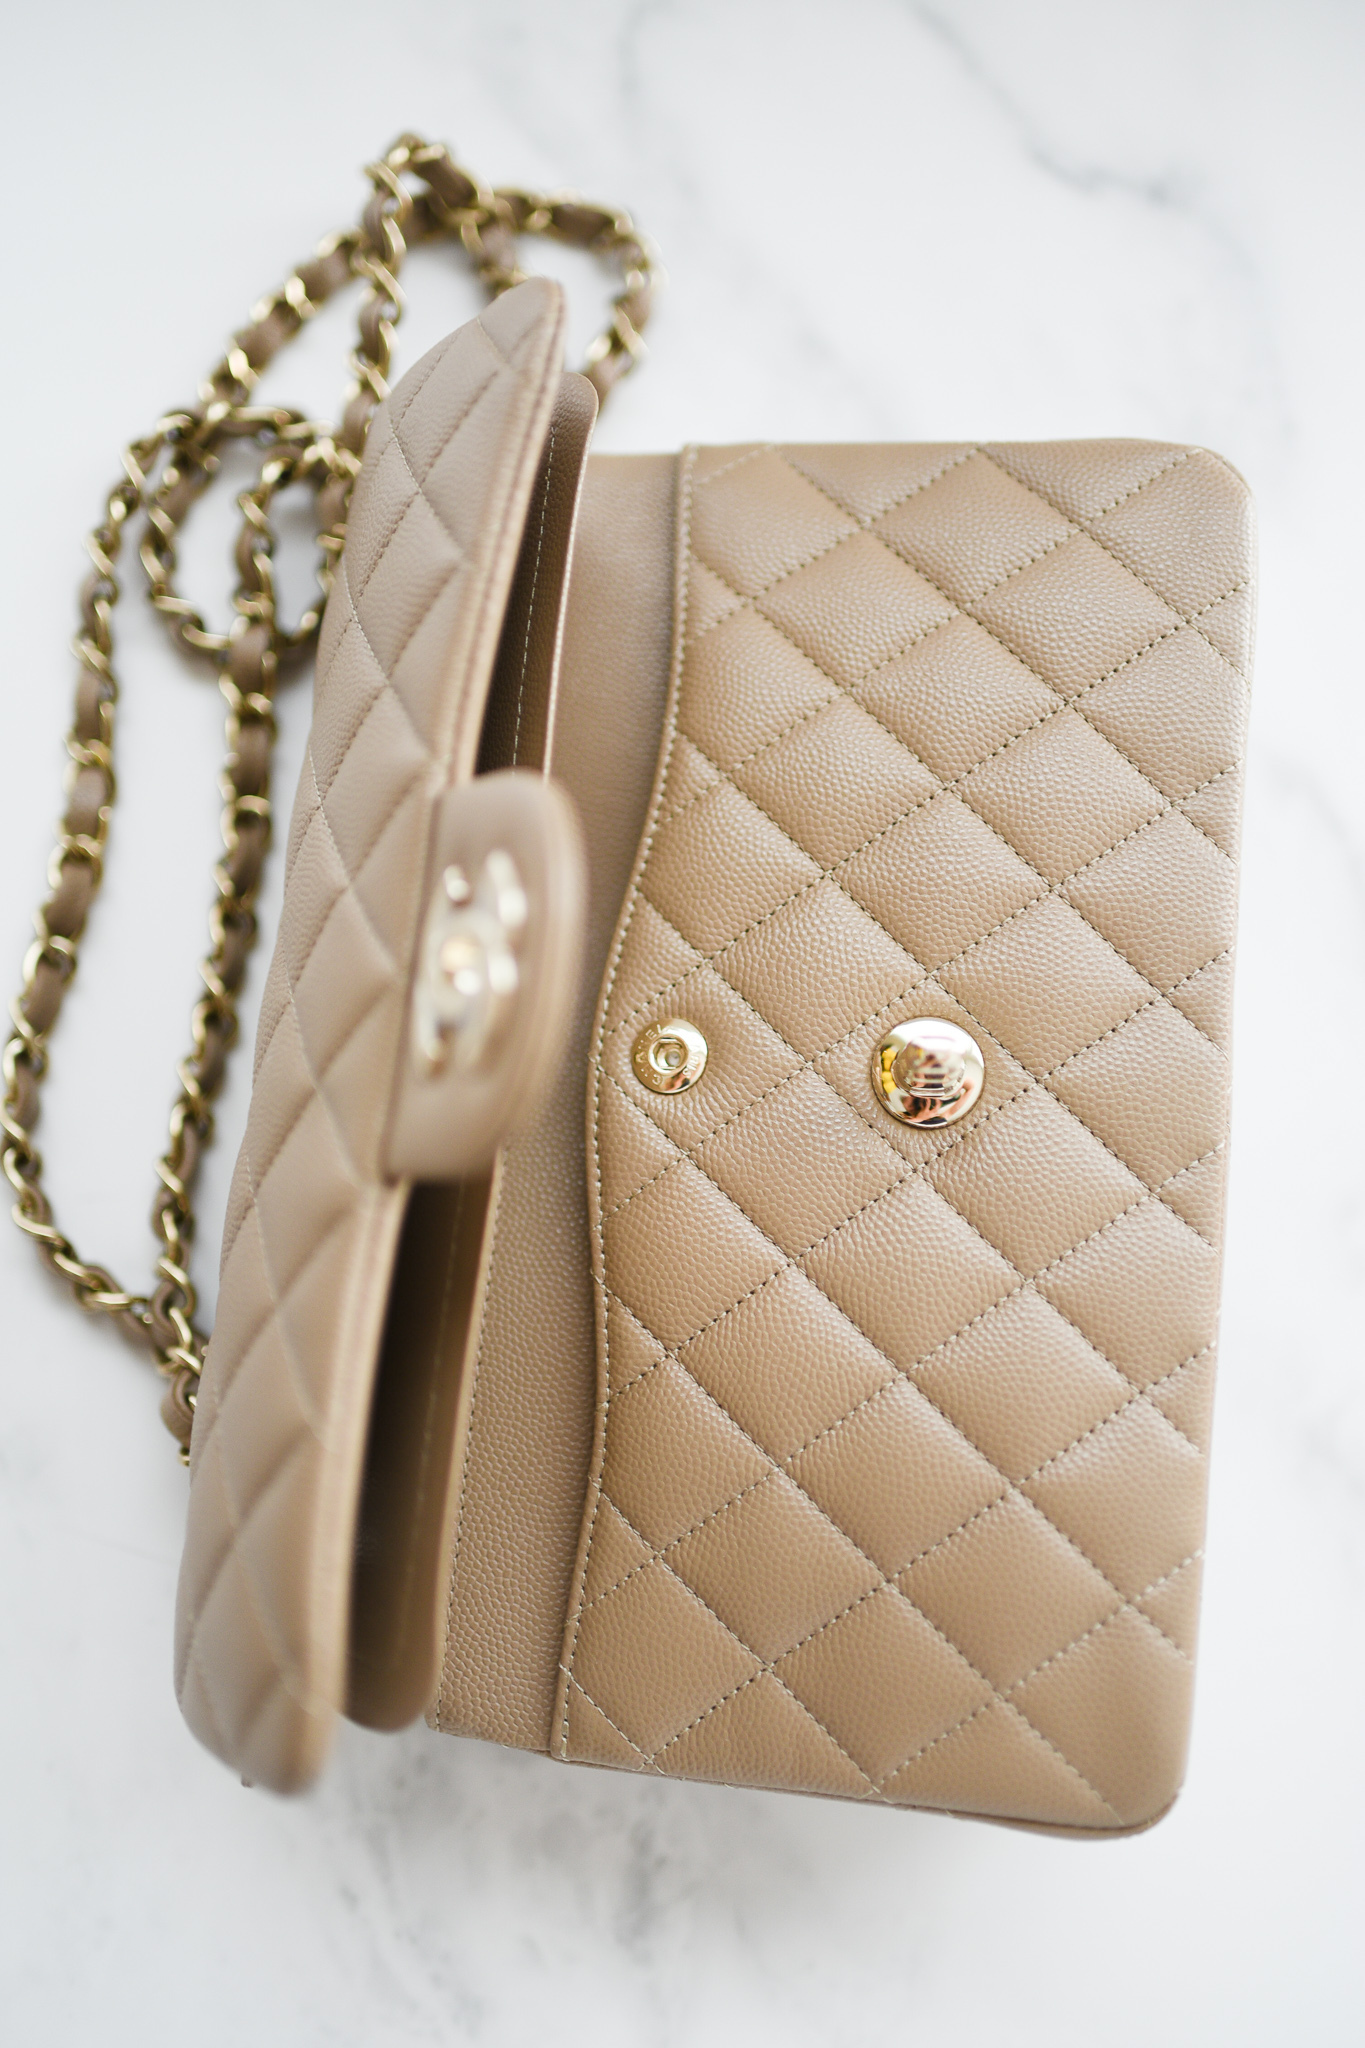 Chanel Classic Small Double Flap, 22A Dark Beige Caviar Leather with Gold  Hardware, New in Box GA001 - Julia Rose Boston